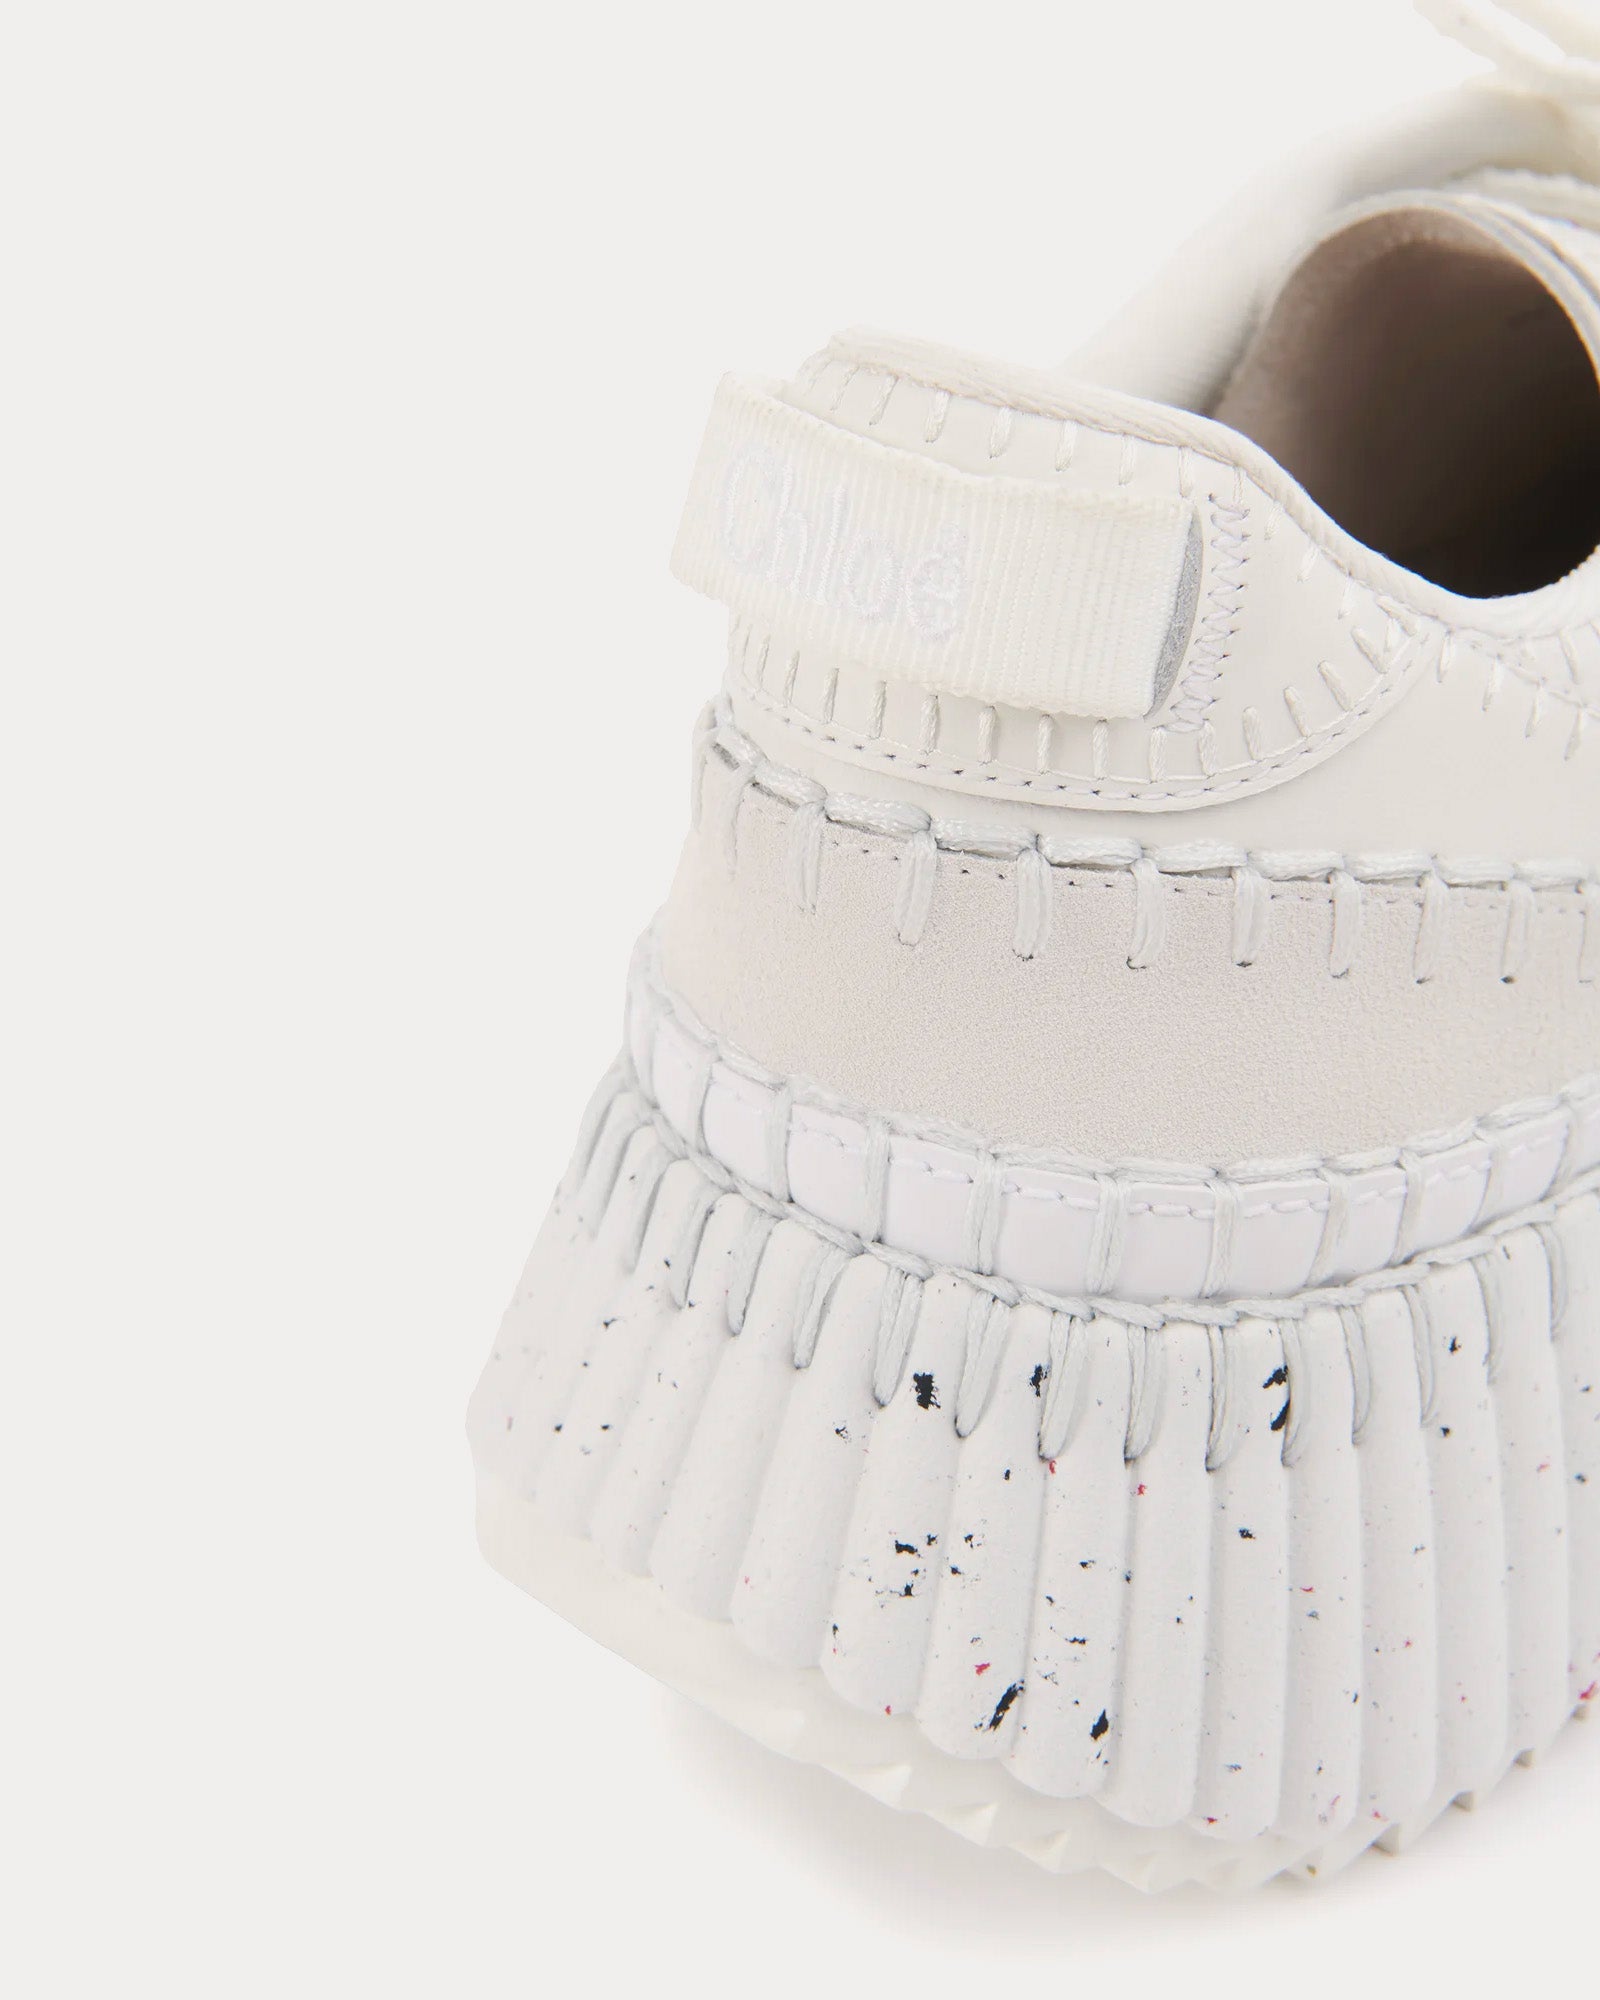 Chloé - Nama Brilliant White Low Top Sneakers